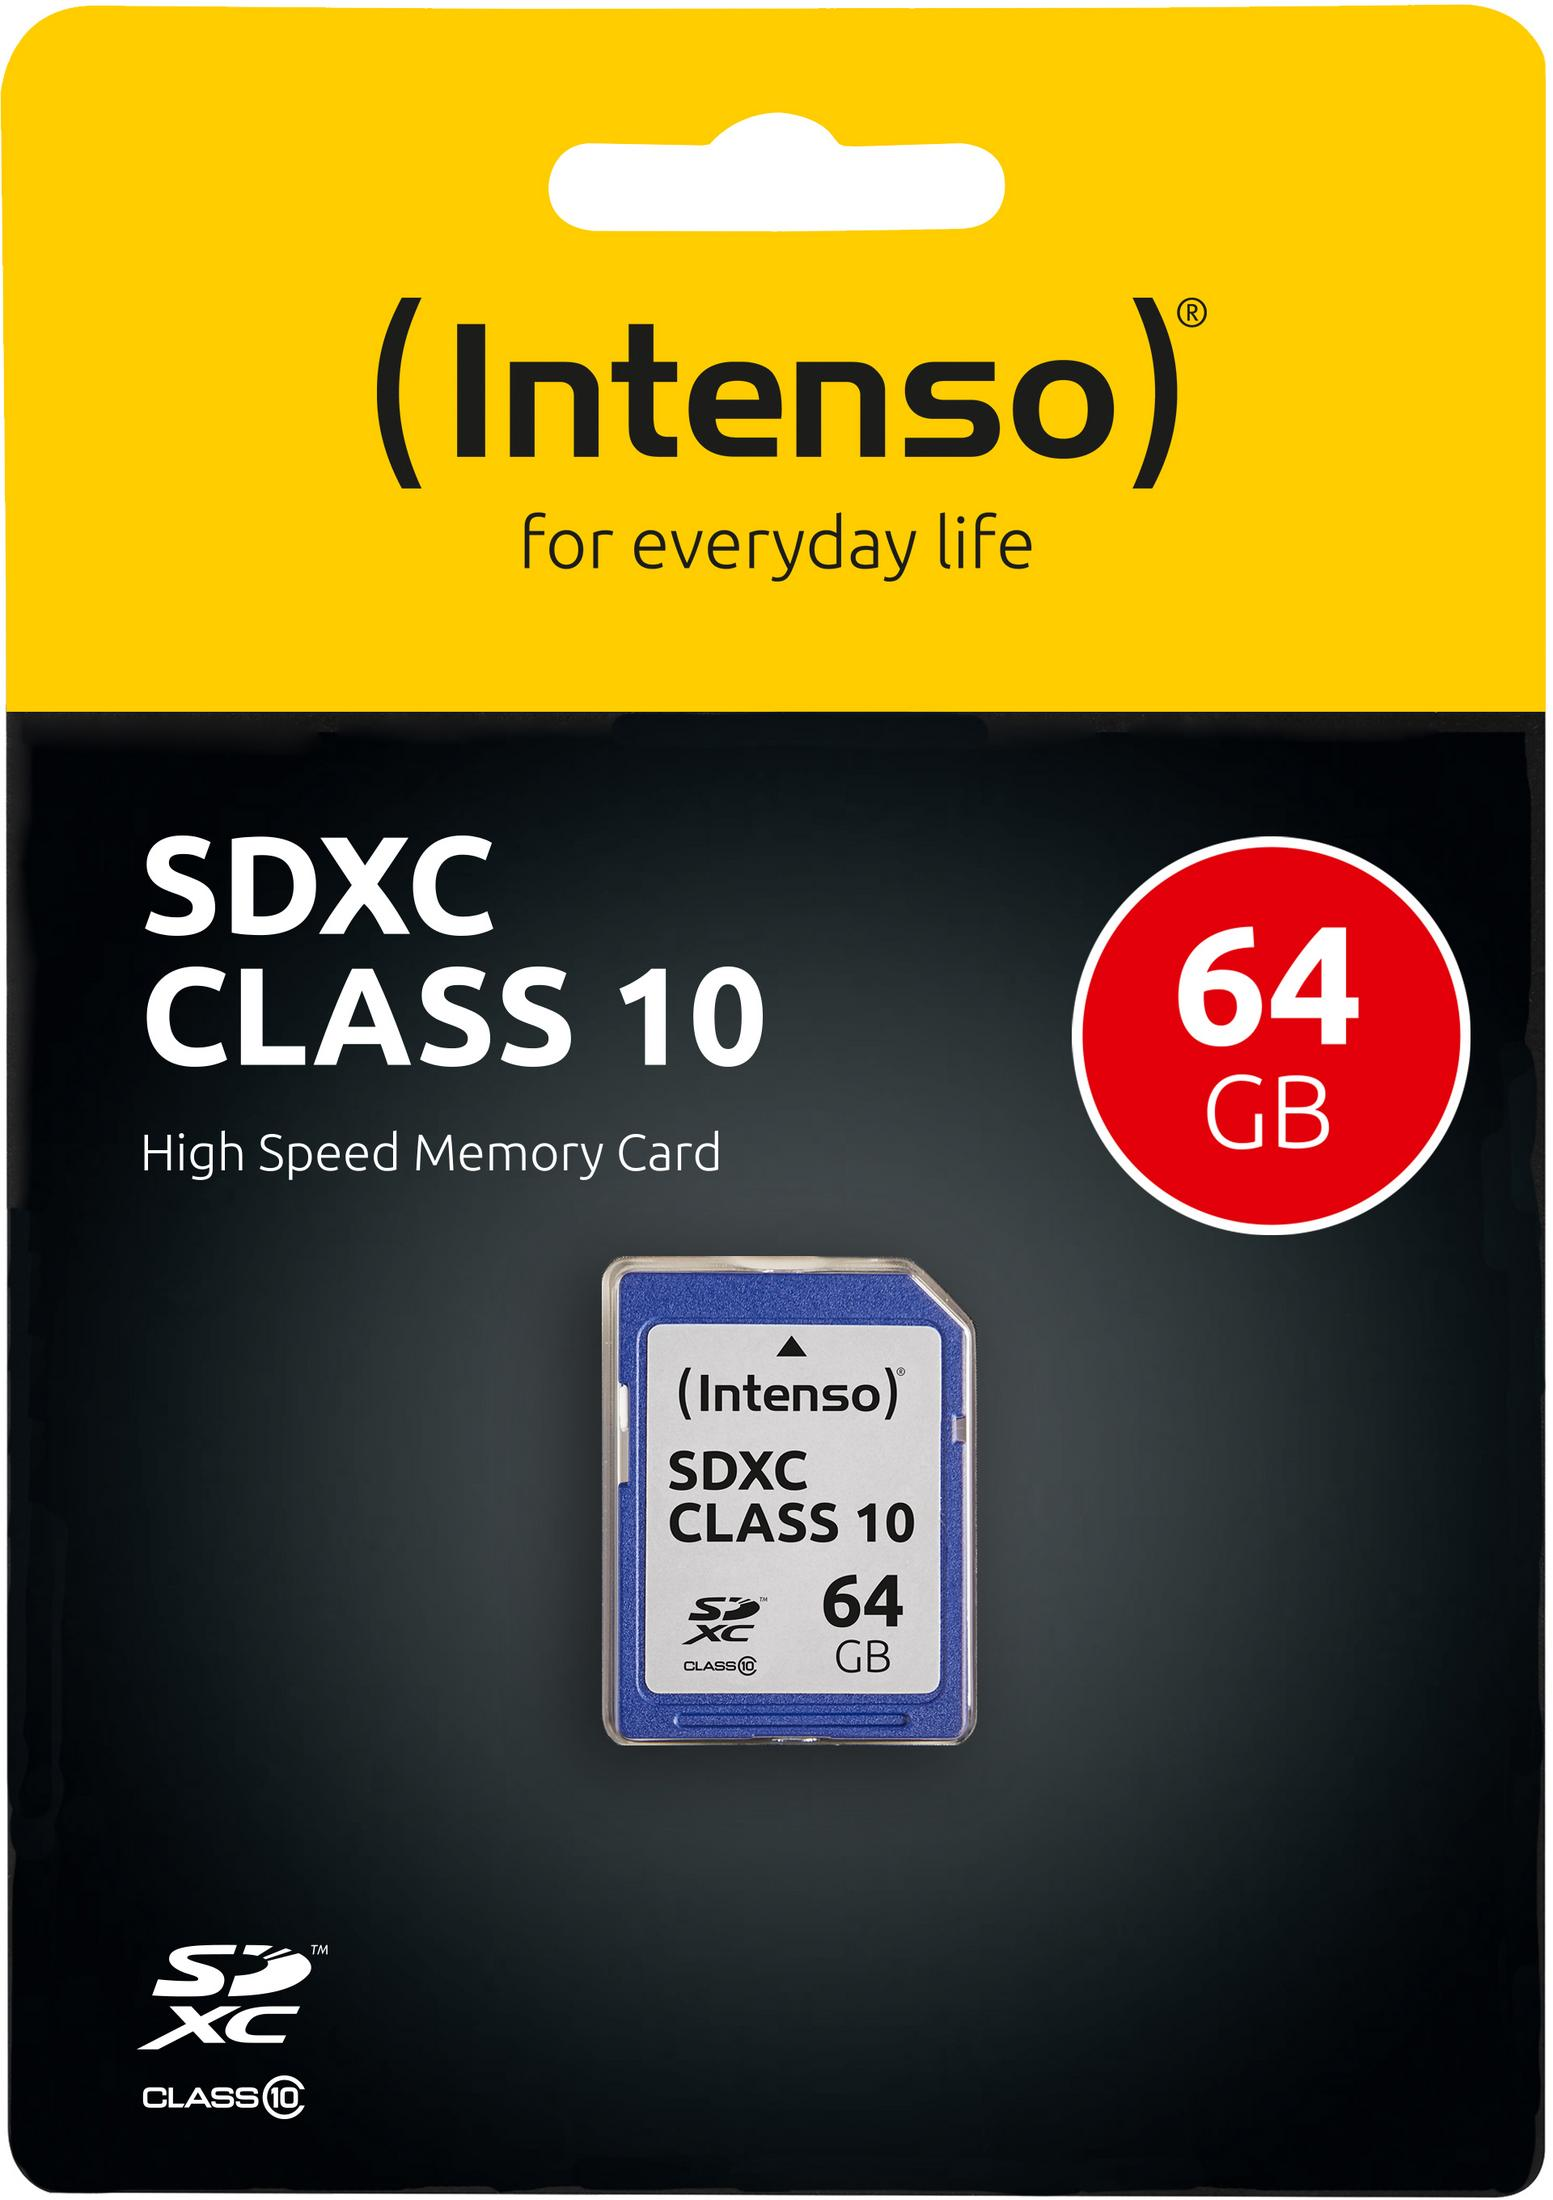 20 GB, 64 Speicherkarte, - 10 GB, MB/s INTENSO Intenso SDXC SD-Speicherkarte 64 Class